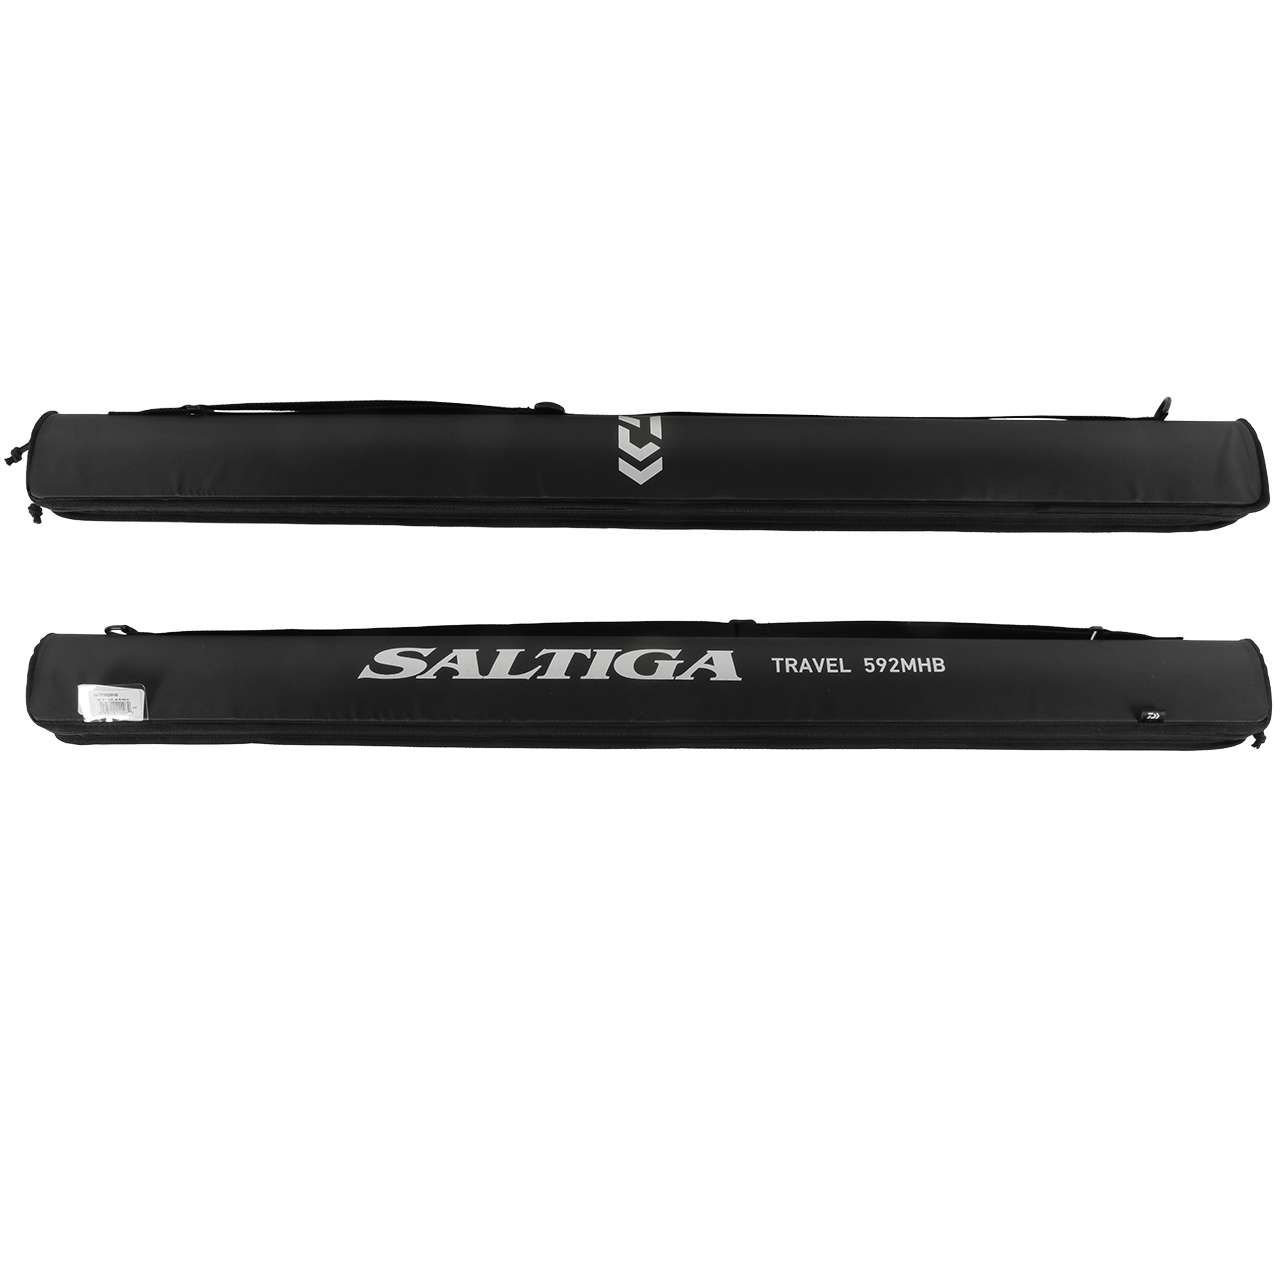 Daiwa Satr592mhb Saltiga Saltwater Travel Casting Rod Tackledirect